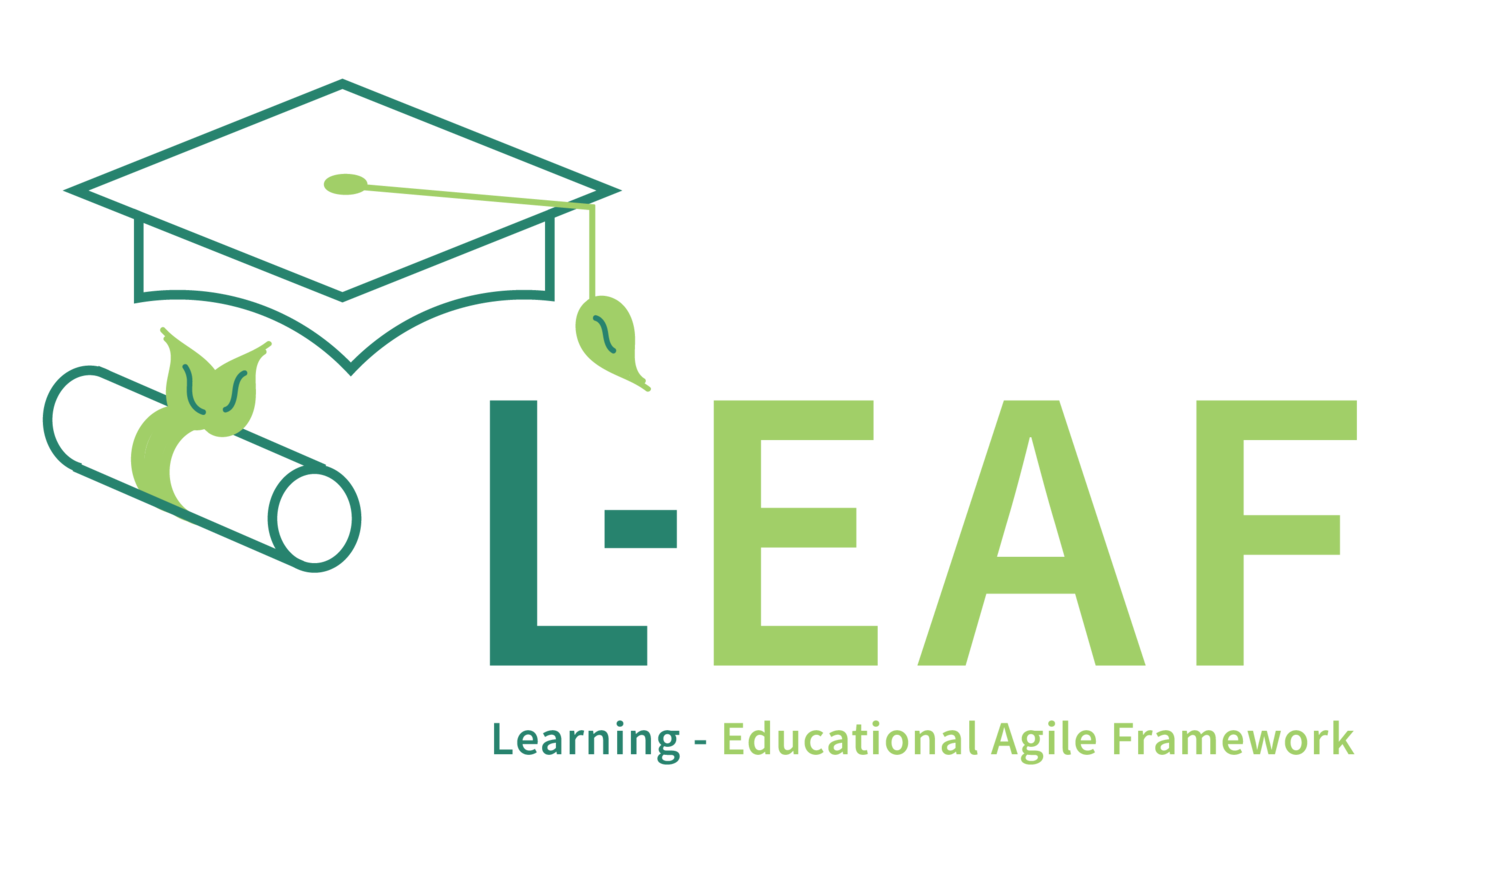 L-EAF: Learning - Educational Agile Framework